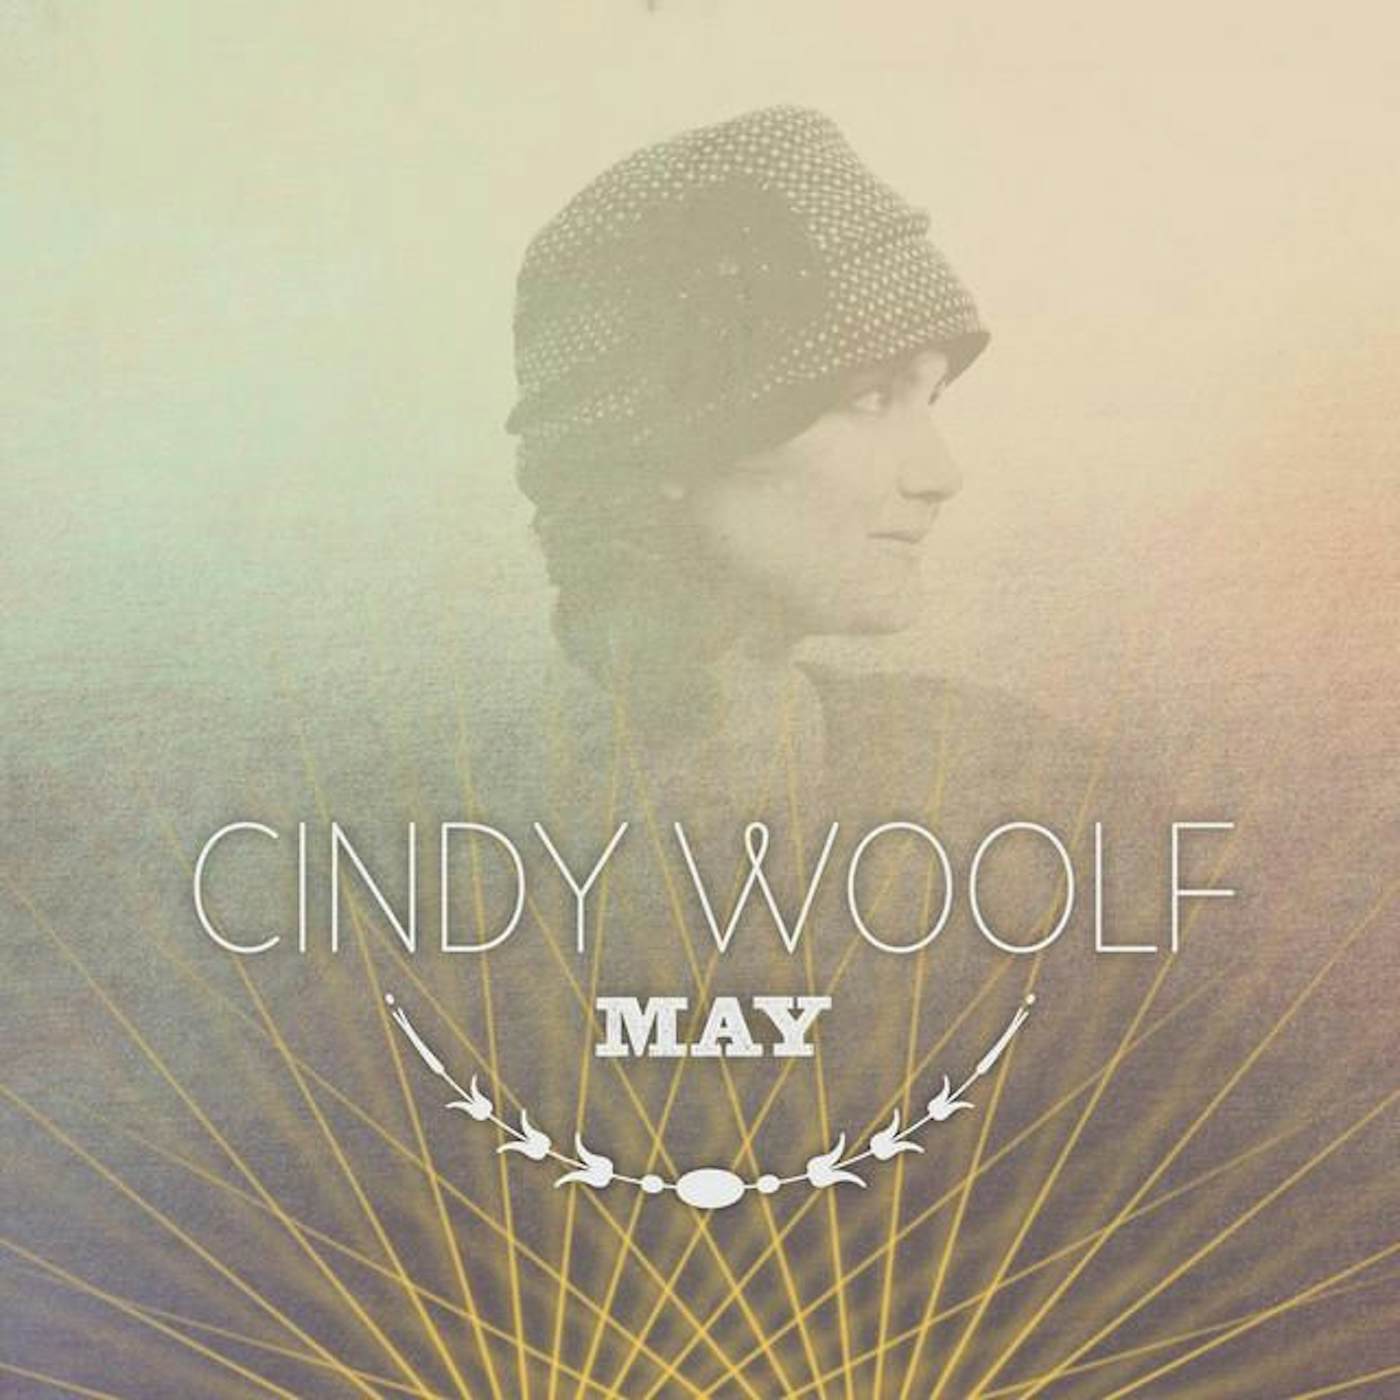 Cindy Woolf